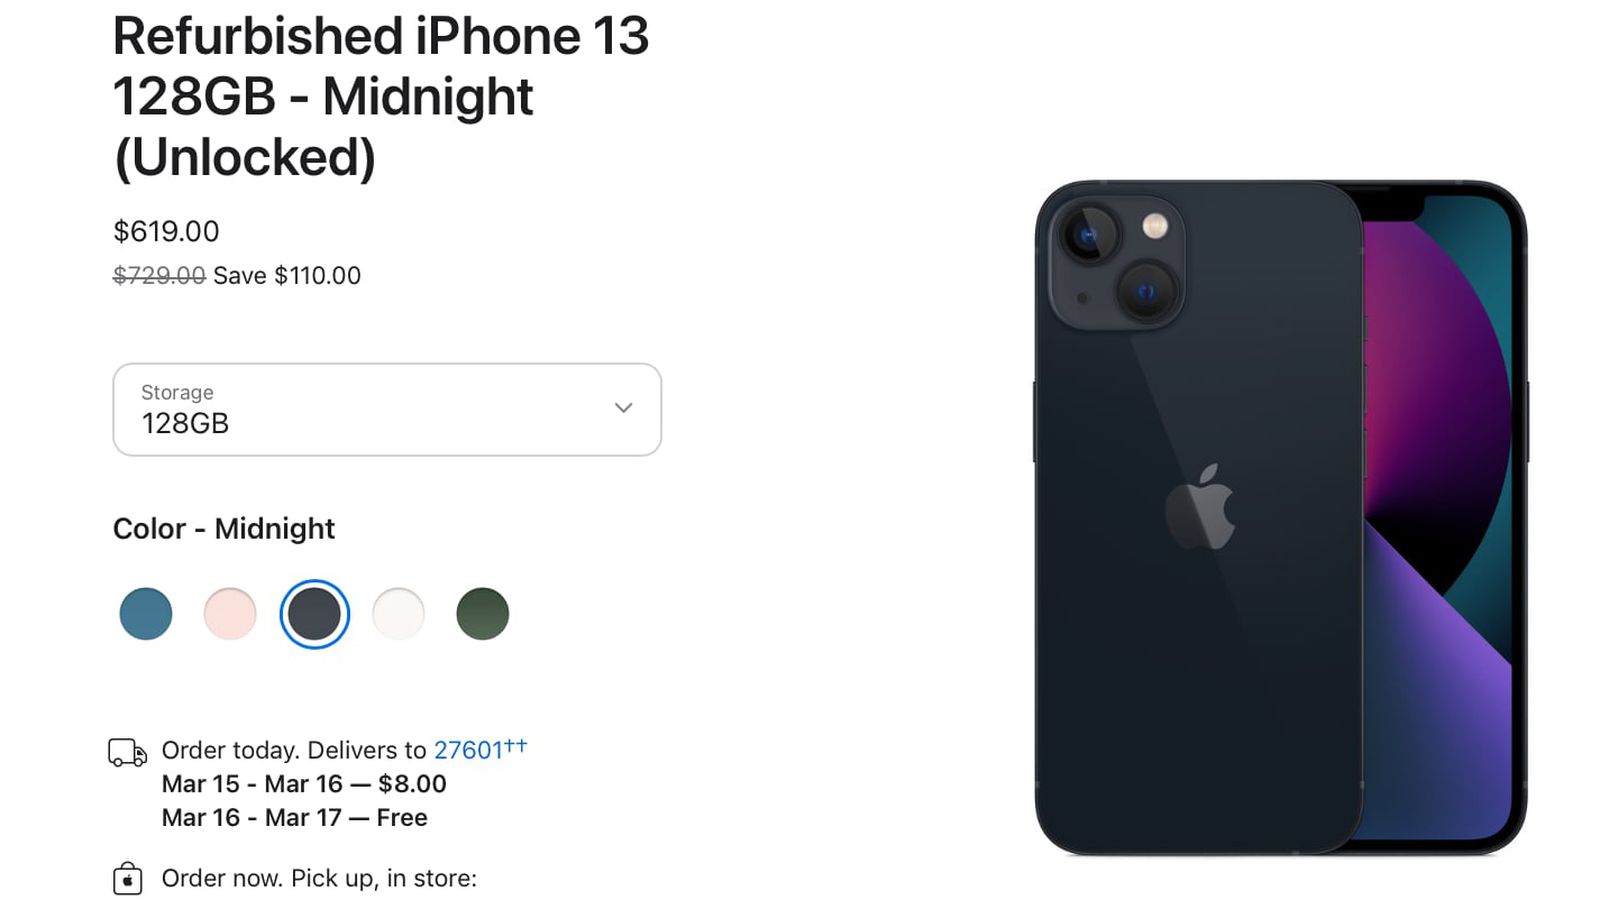 Buy iPhone 13 - Apple